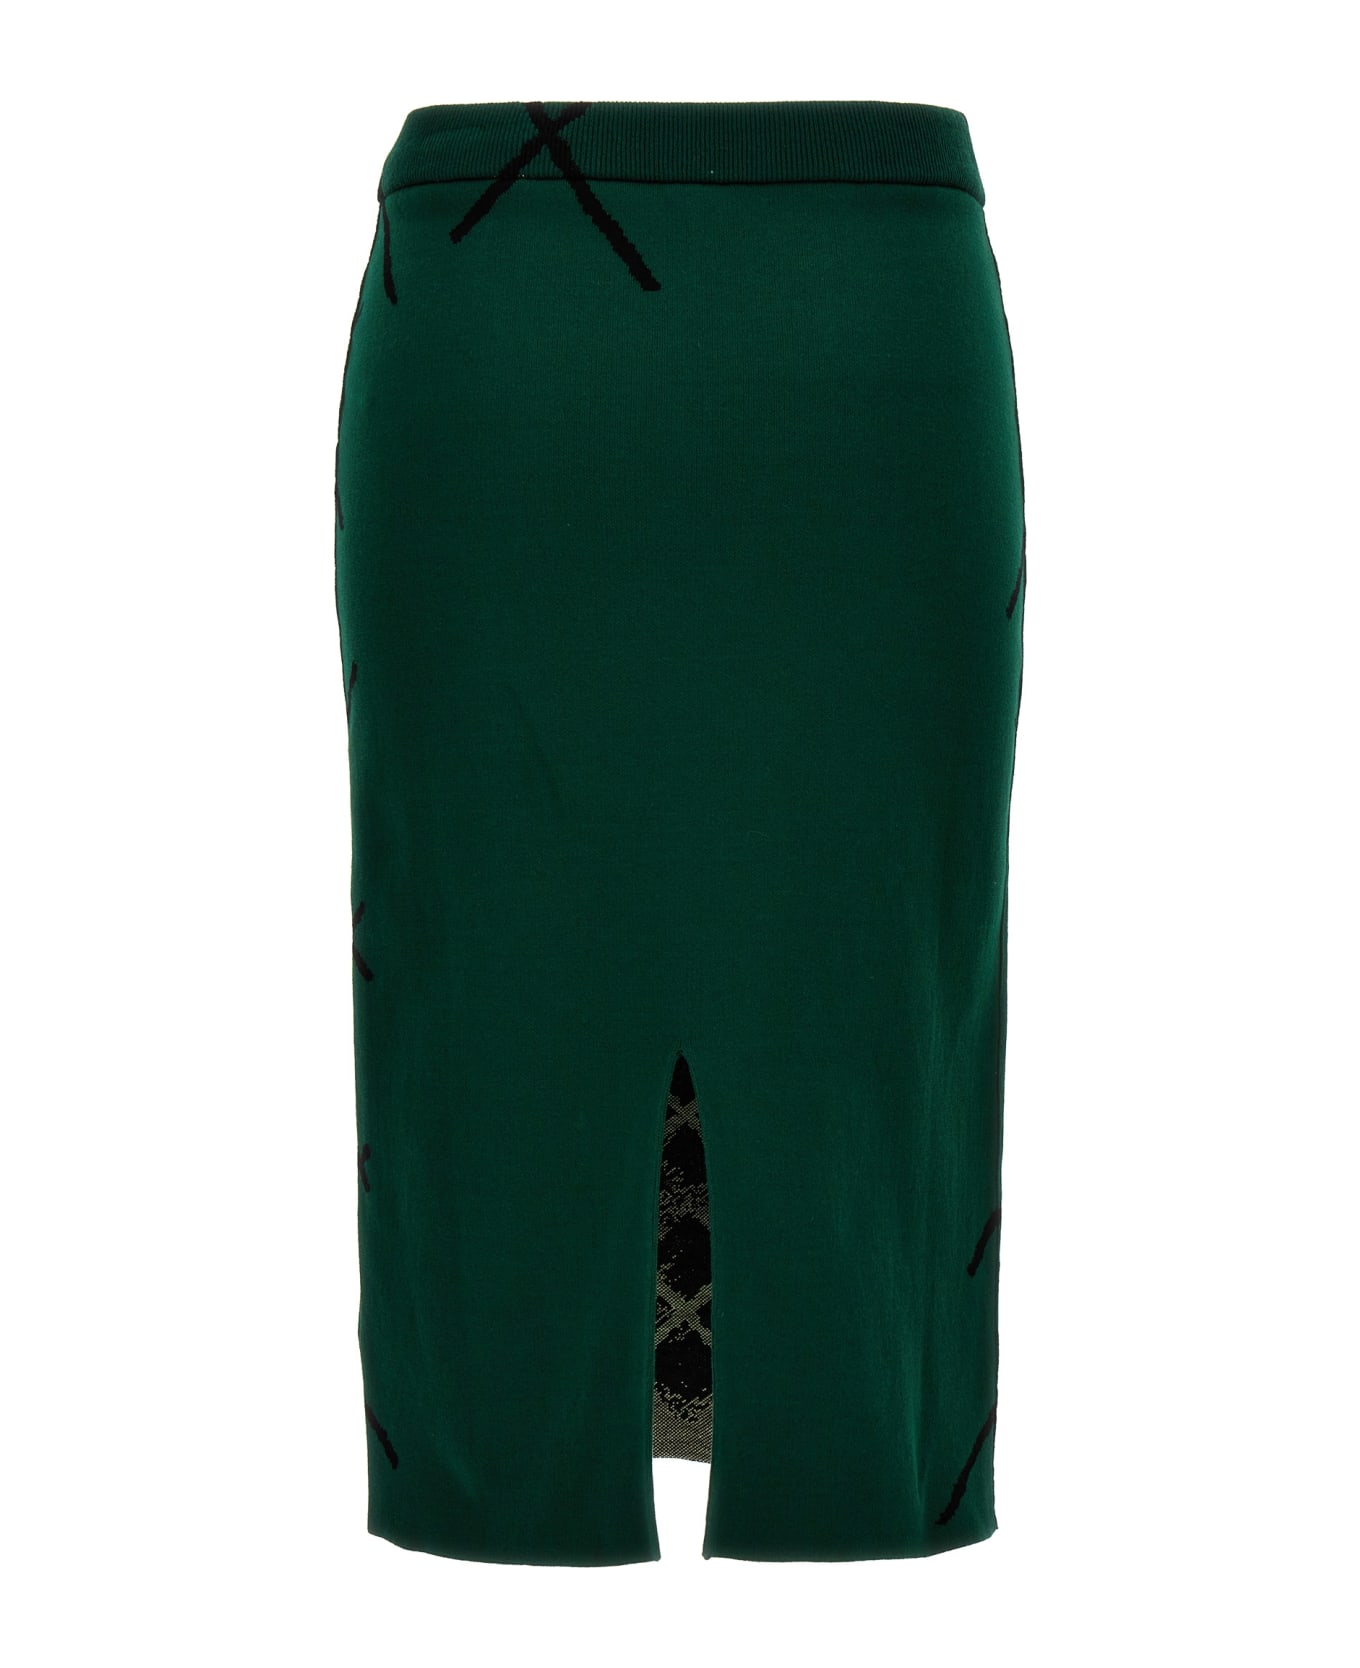 Burberry Argyle Pattern Skirt - Green